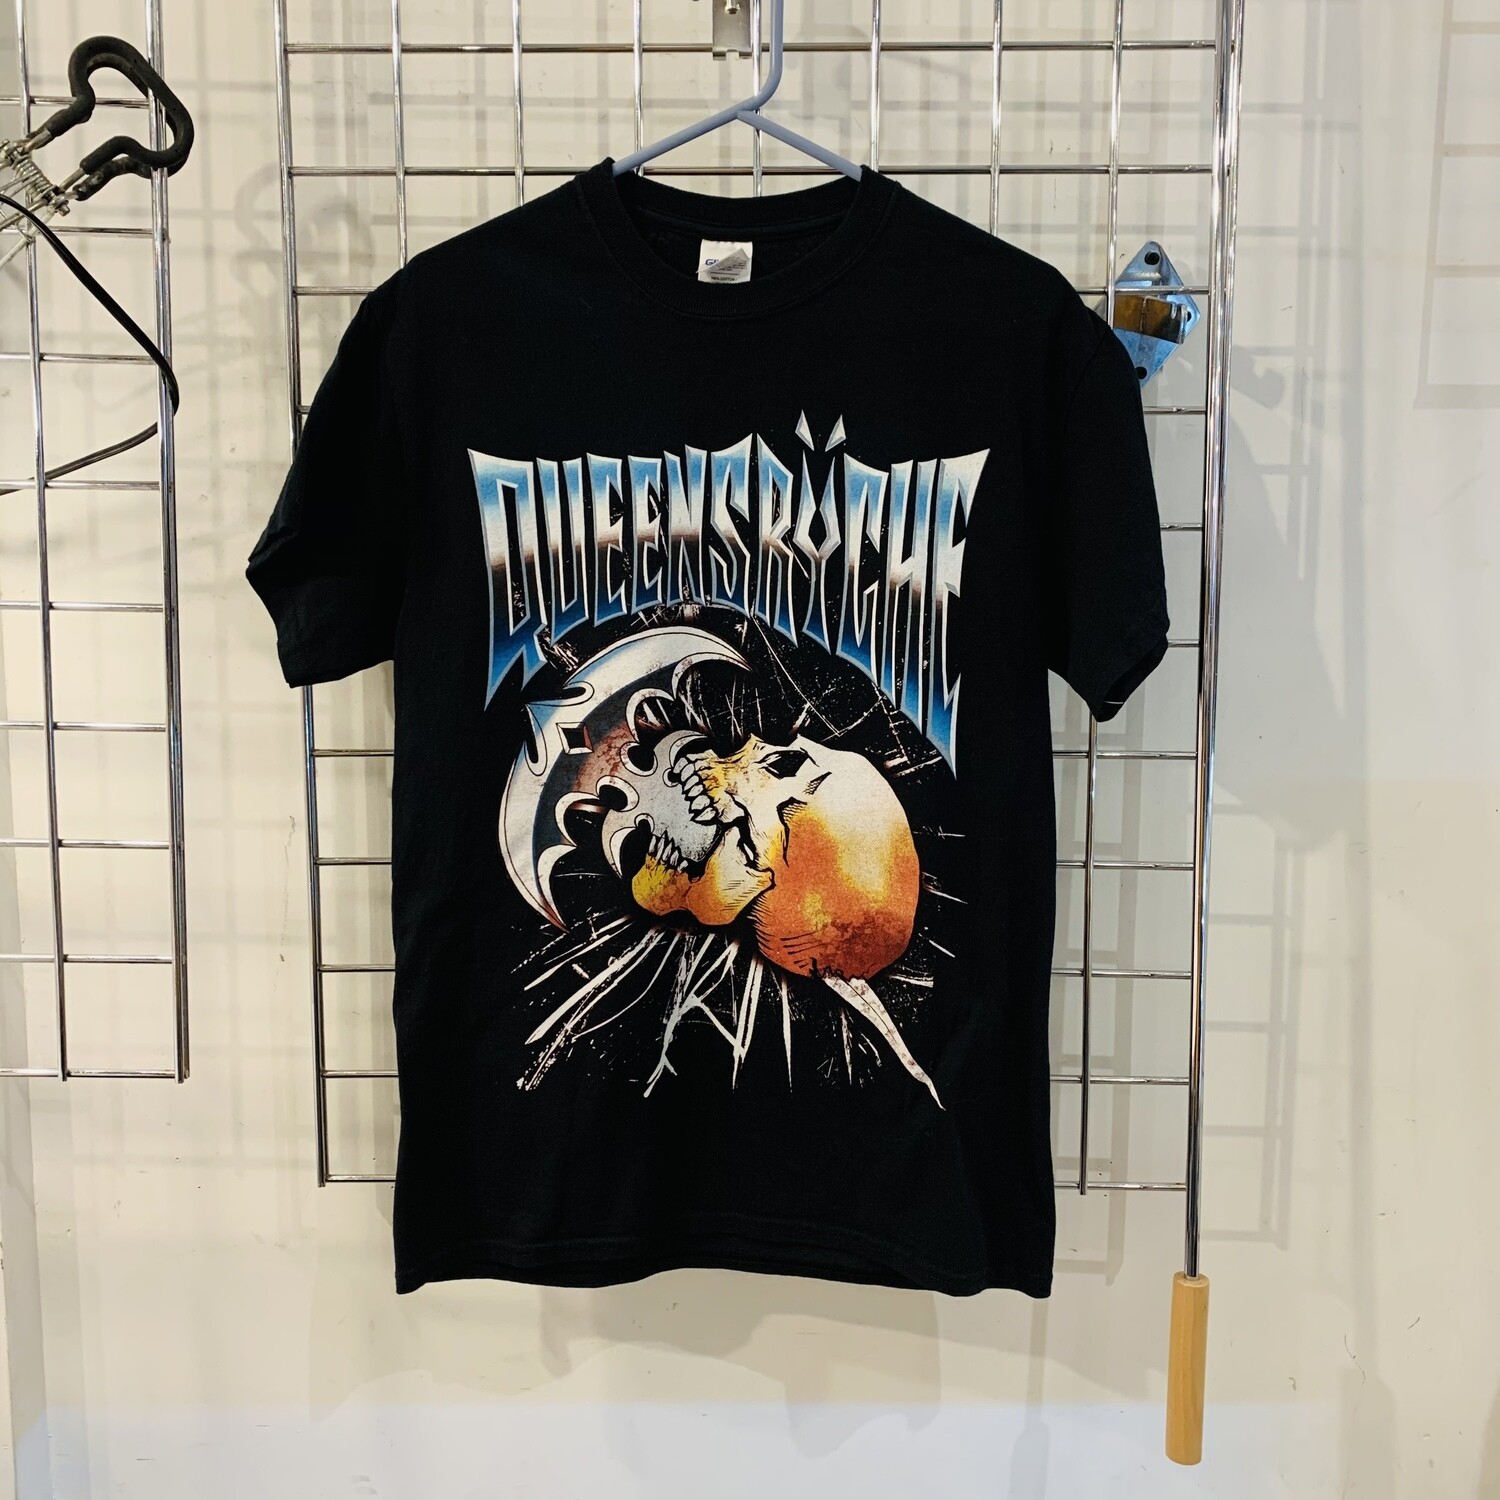 Size Medium Queensryche Tour 2015 T-Shirt Black